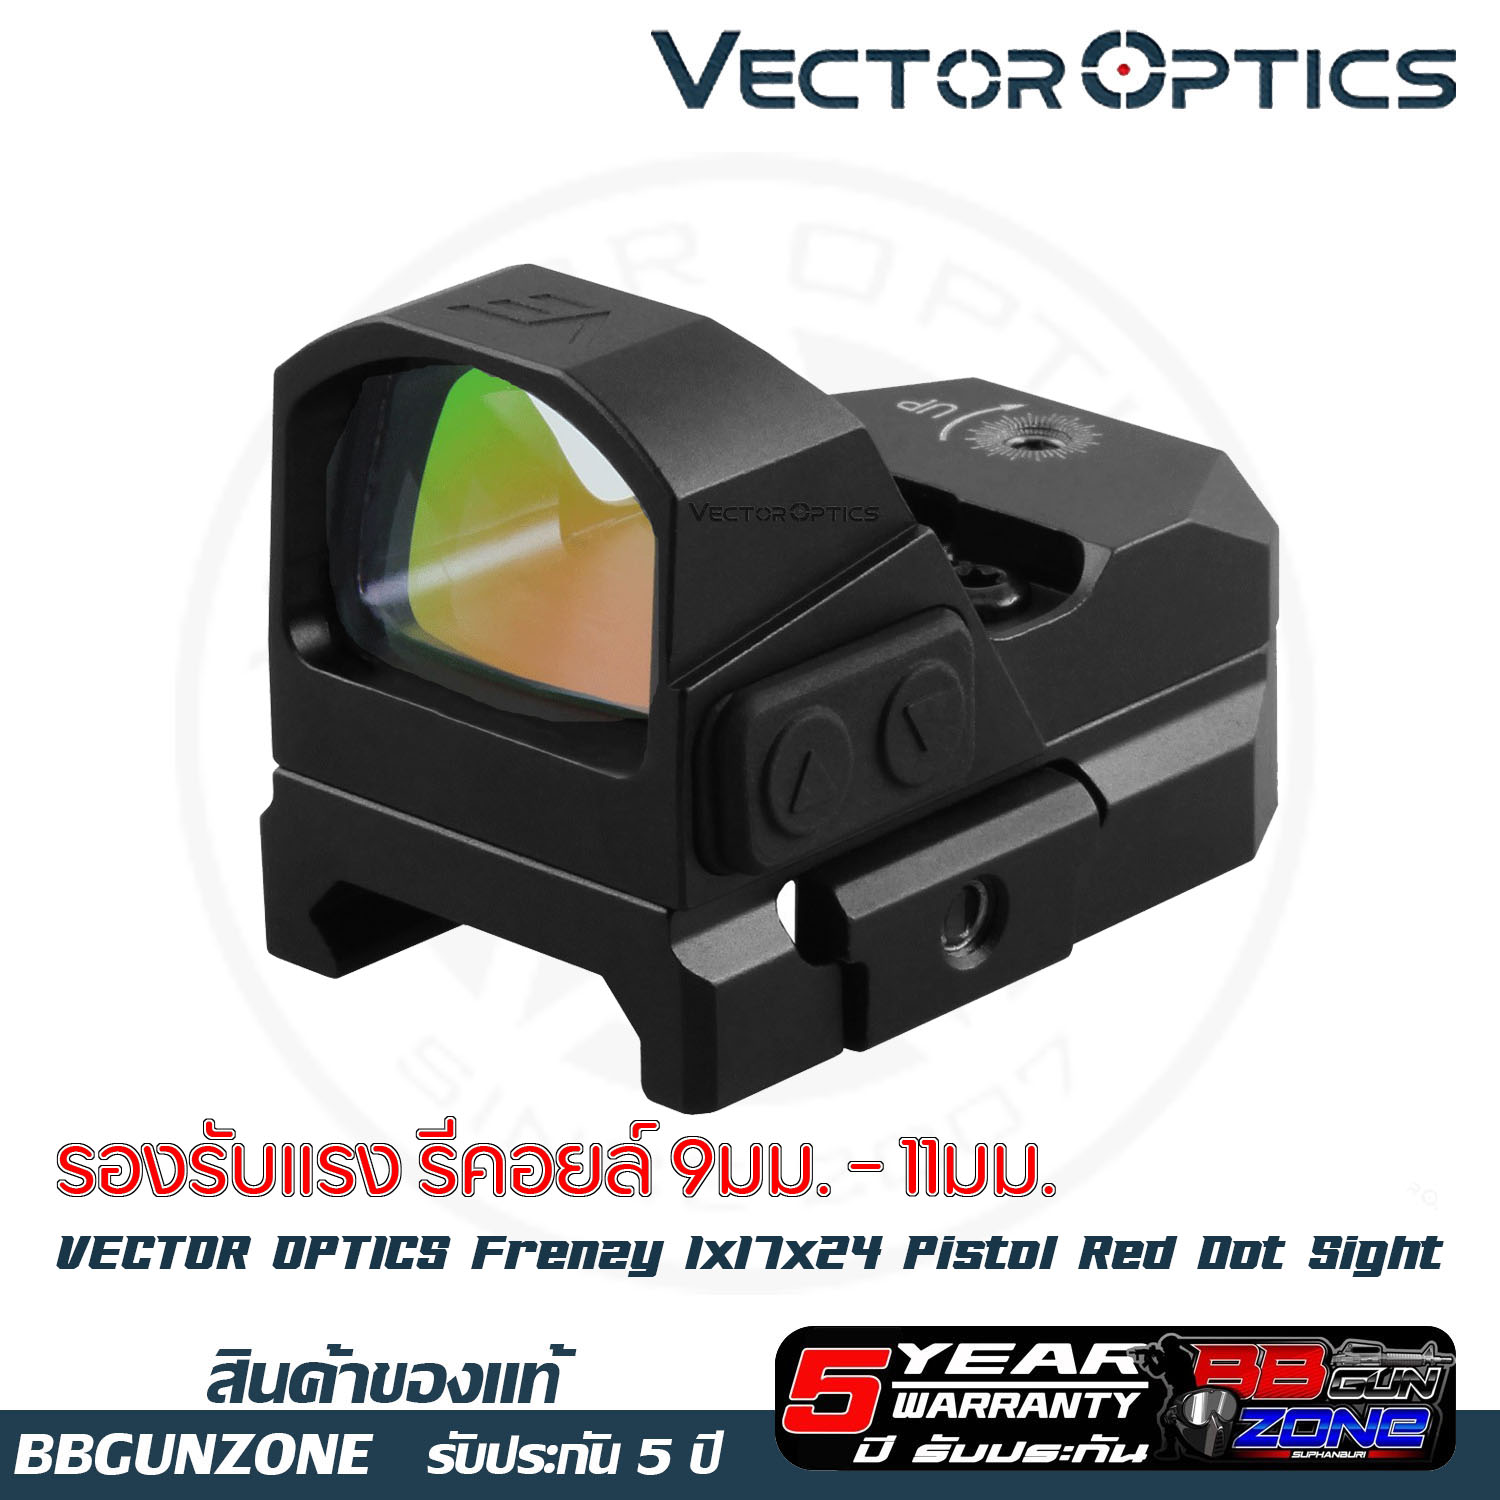 Vector Optics Frenzy 1x17x24 Pistol Red Dot Sight